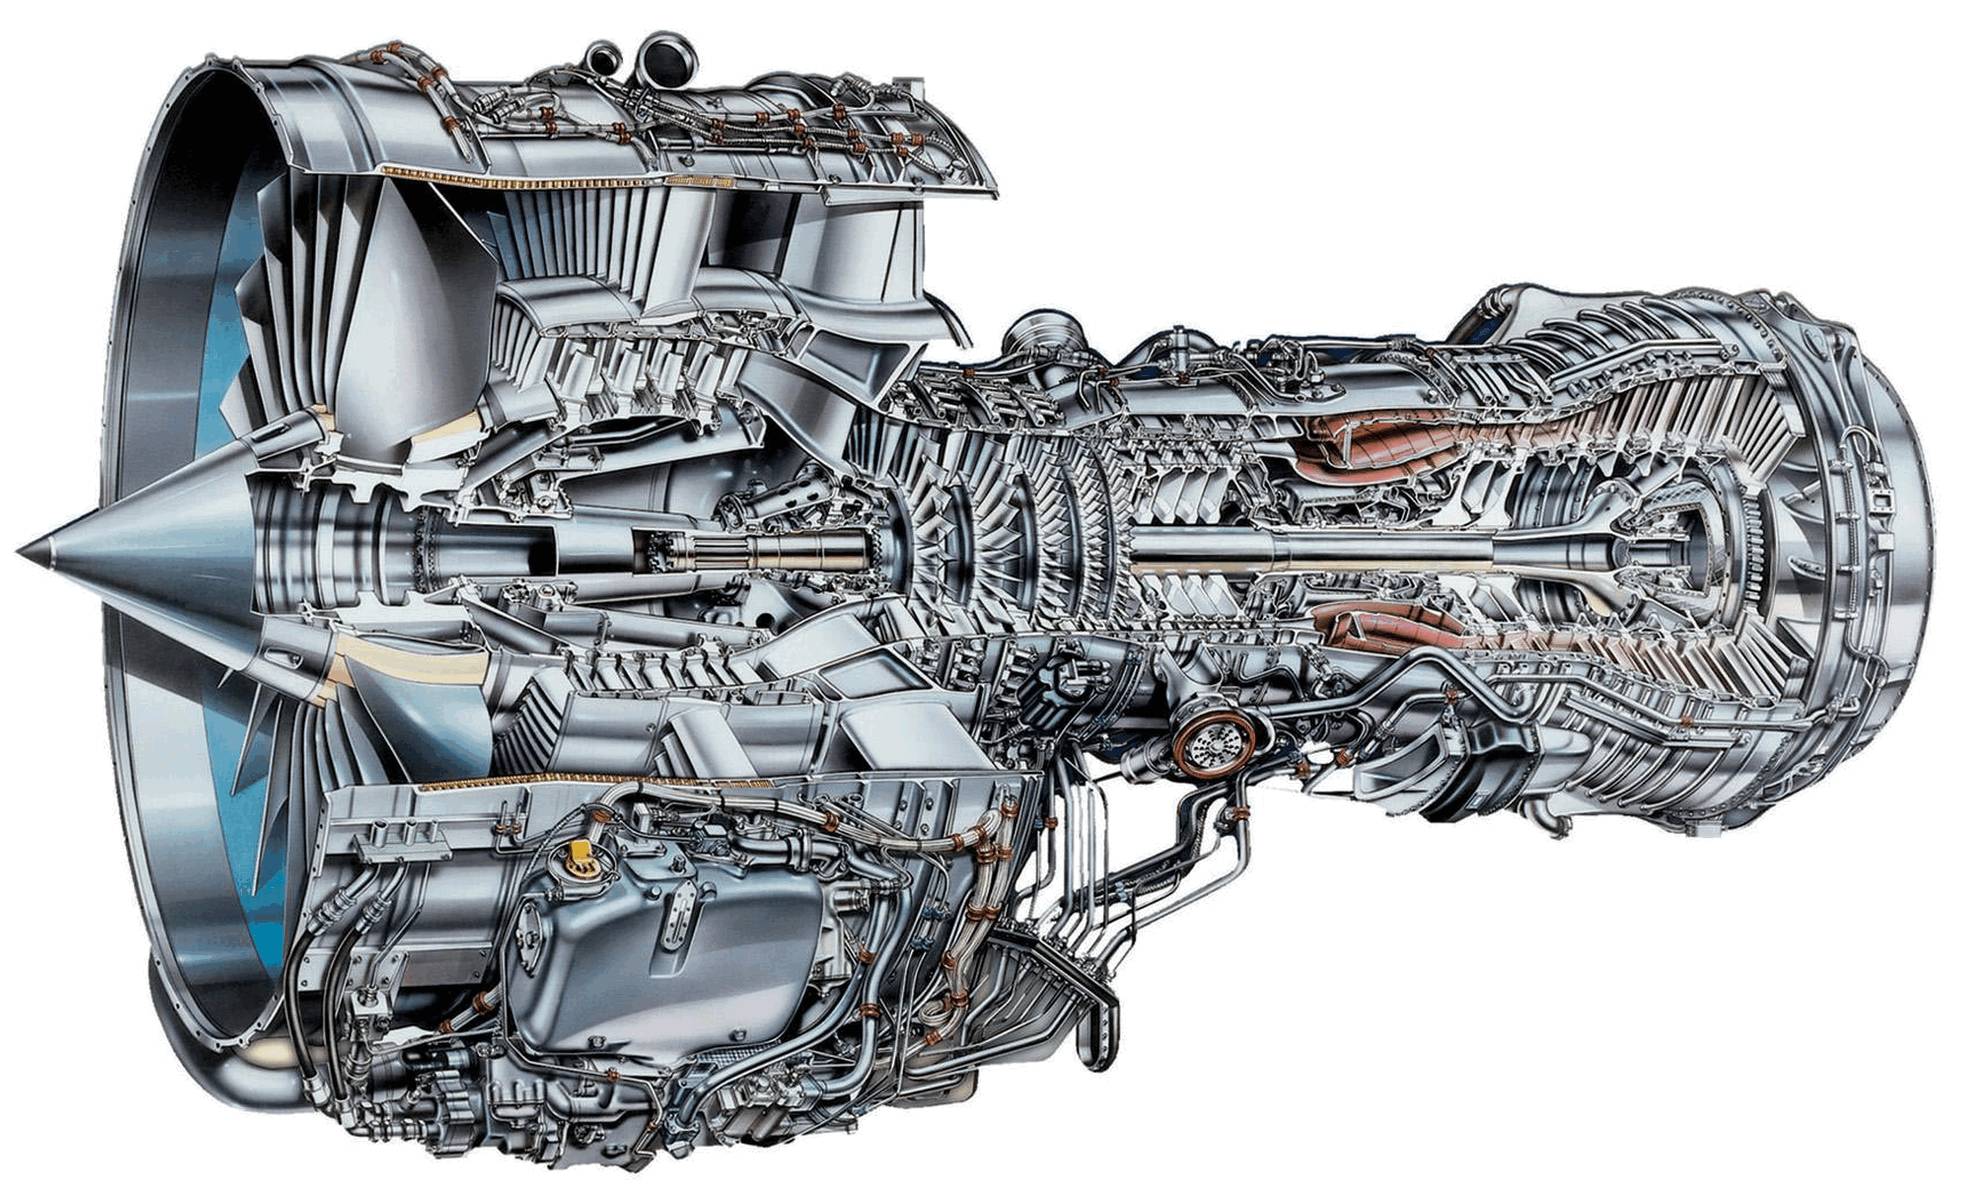 v2500发动机是由国际航空发动机公司(iae)研制生产的高涵道比双转子轴